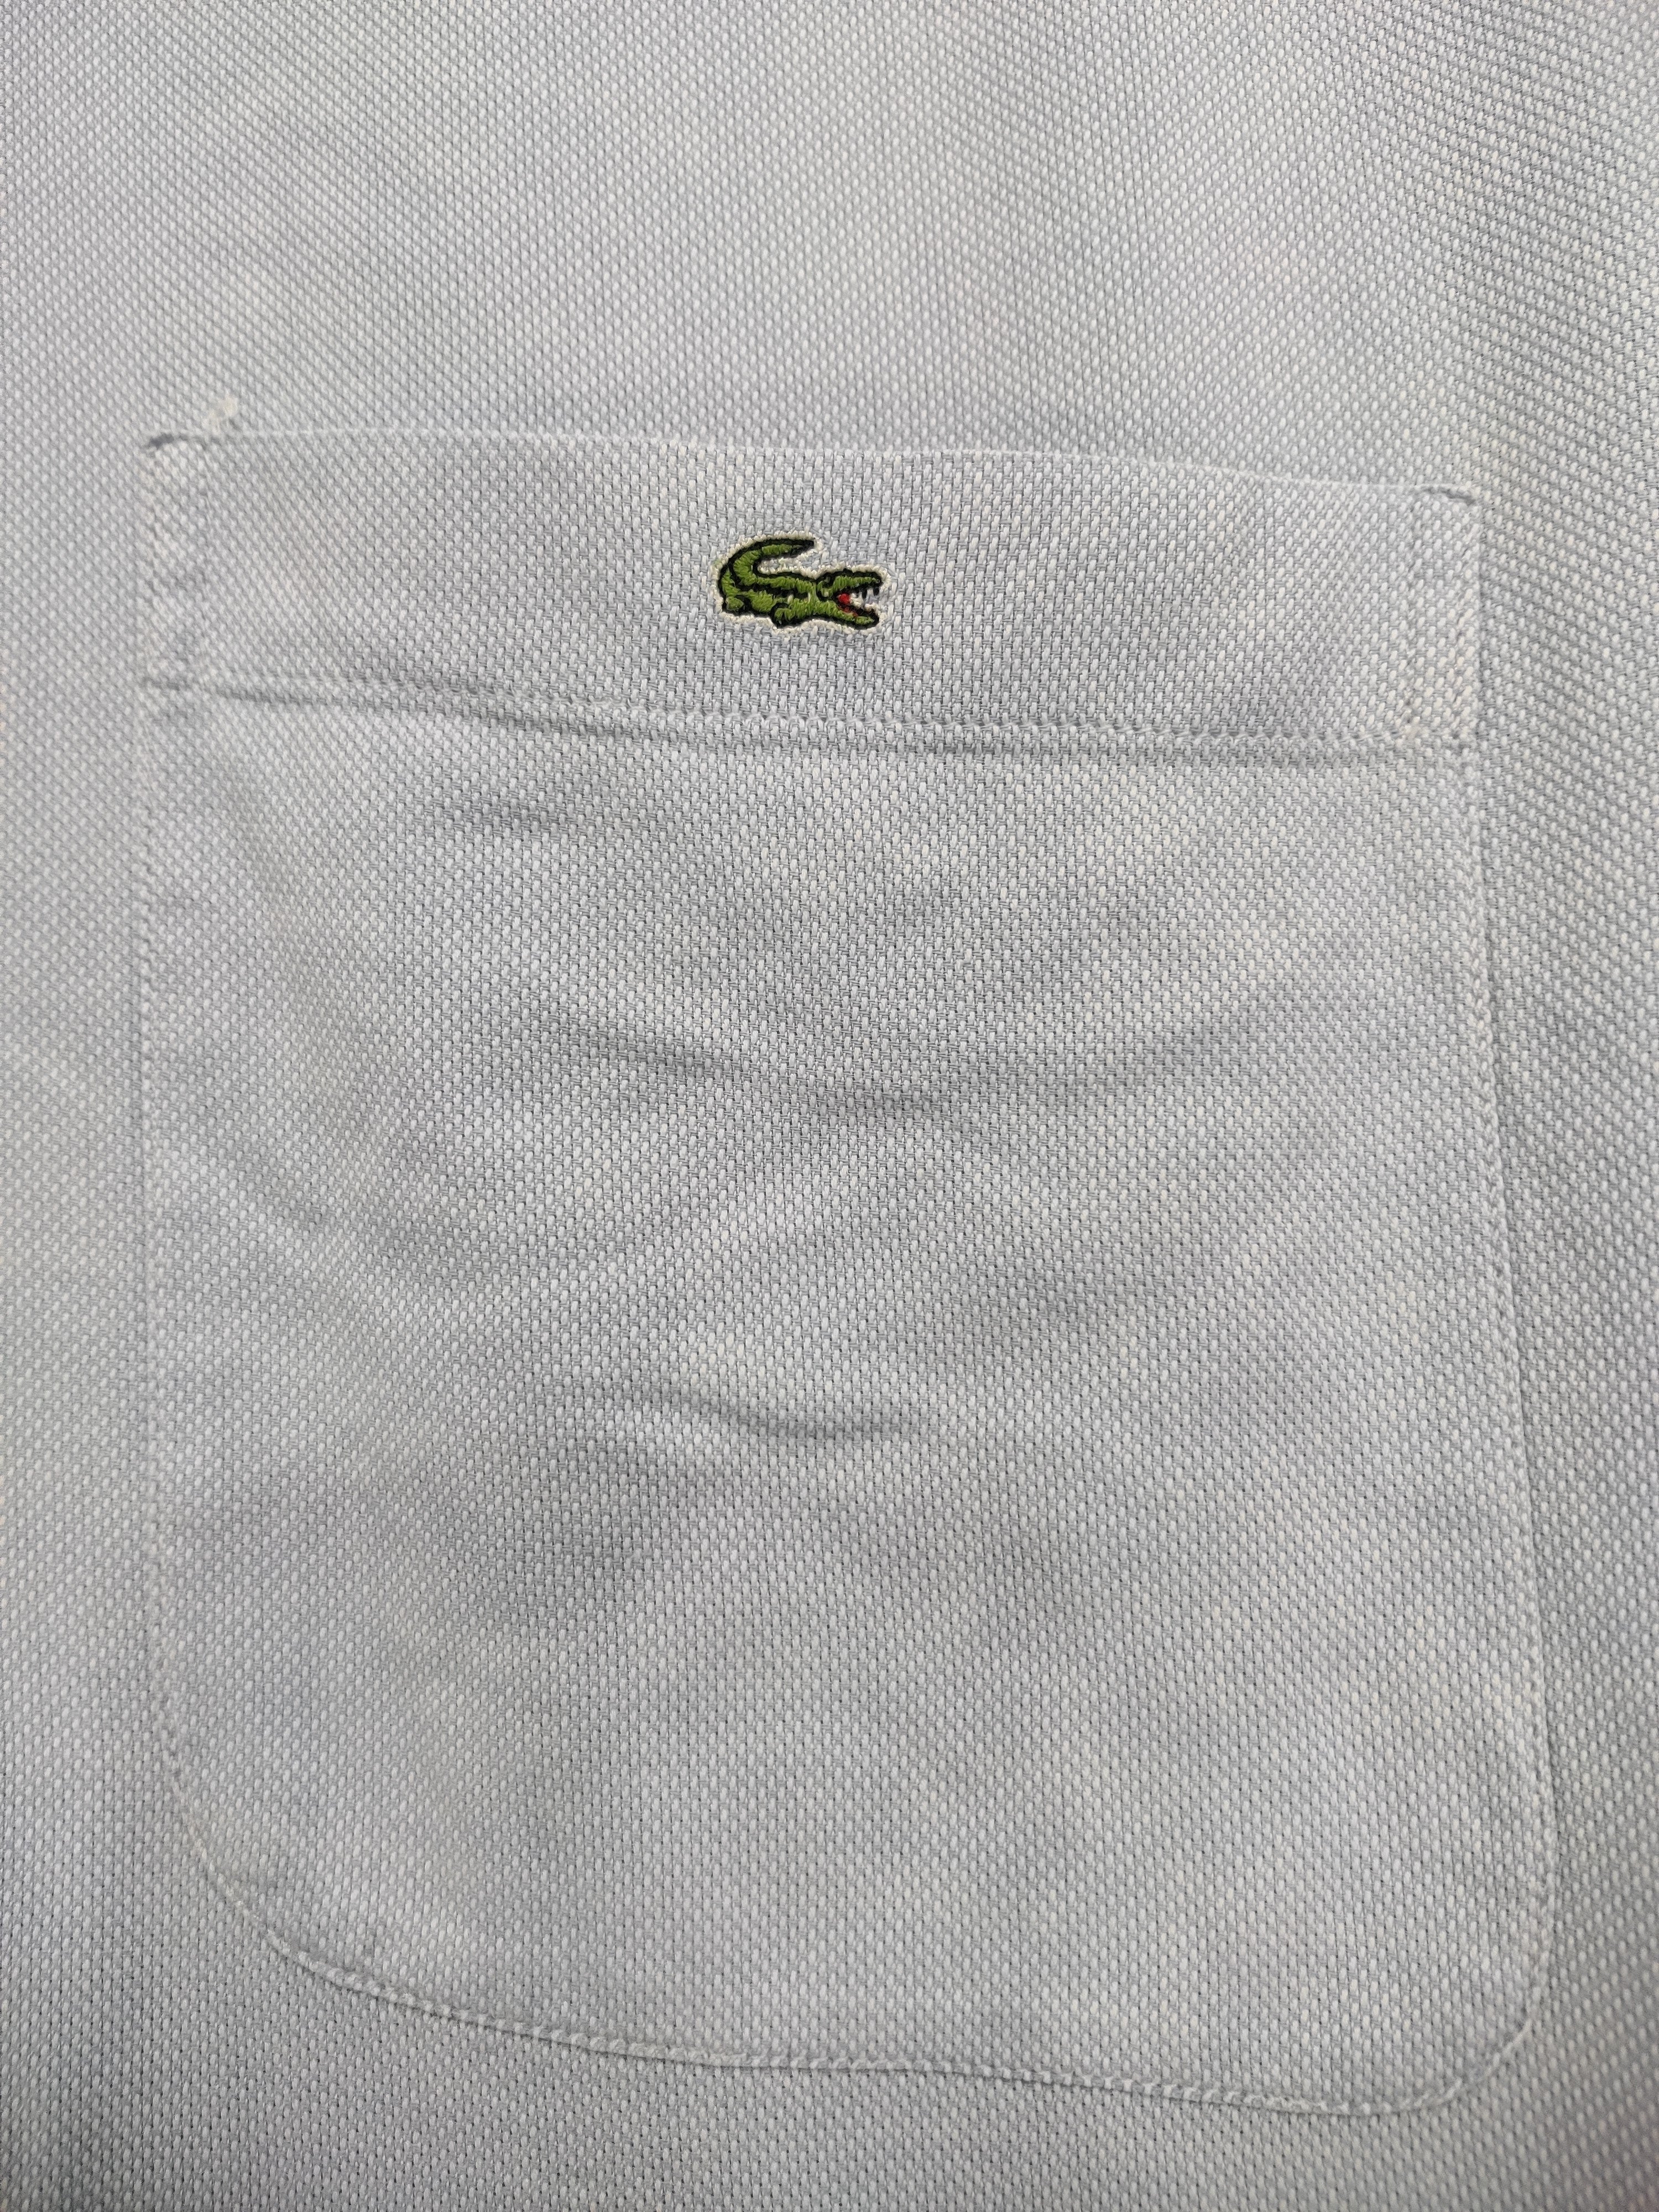 Lacoste Branded Original Cotton Shirt For Men